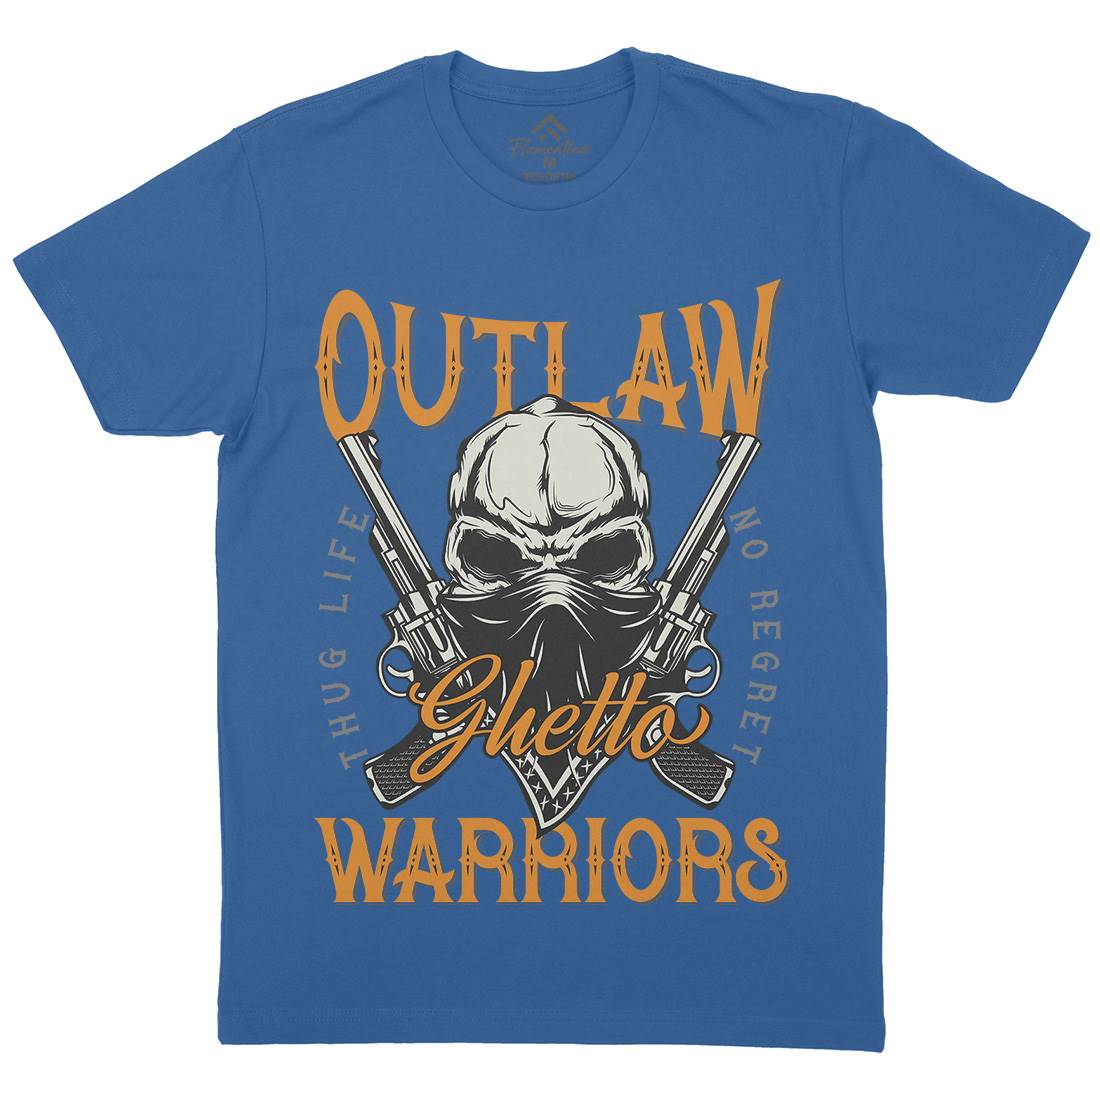 Outlaw Warriors Mens Organic Crew Neck T-Shirt Retro D959